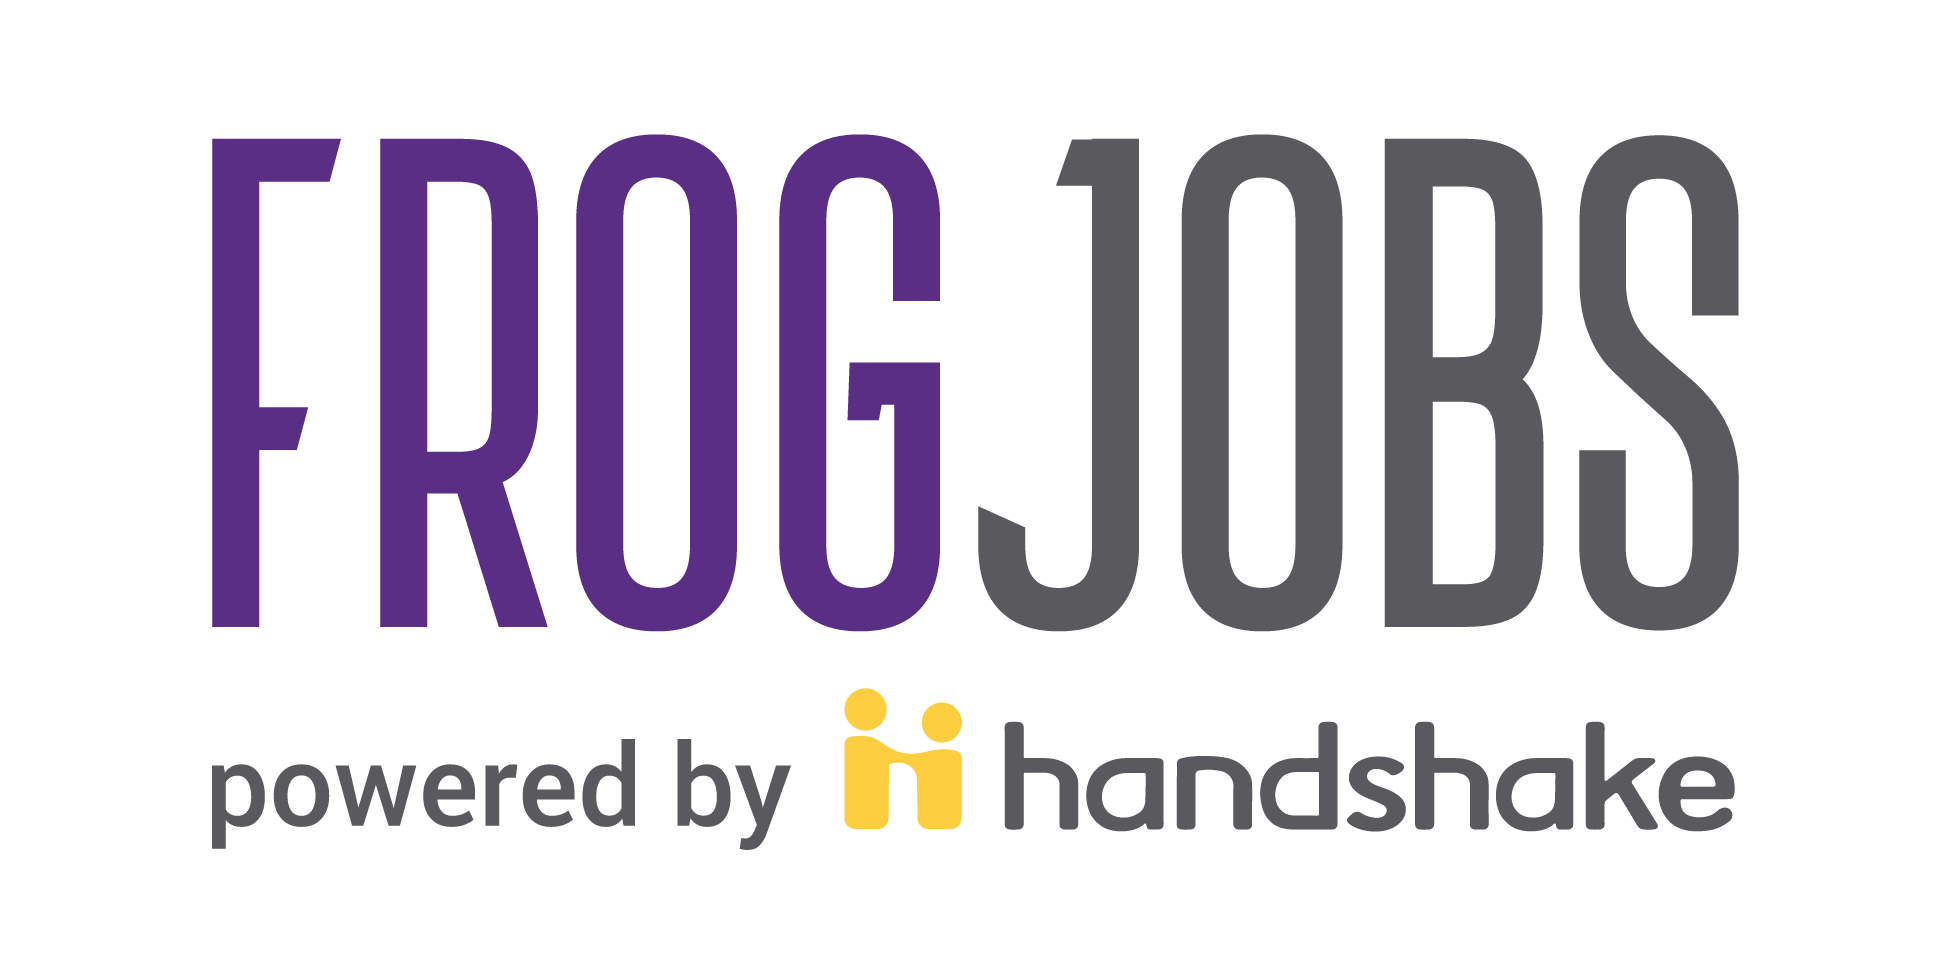 FrogJobs powered by Handshake logo